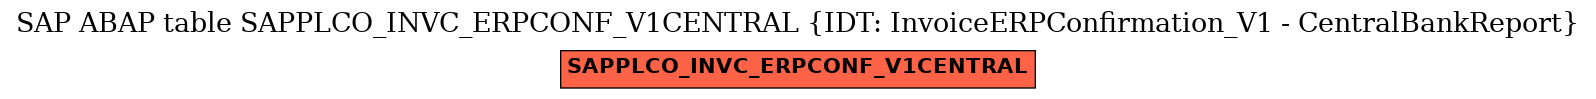 E-R Diagram for table SAPPLCO_INVC_ERPCONF_V1CENTRAL (IDT: InvoiceERPConfirmation_V1 - CentralBankReport)